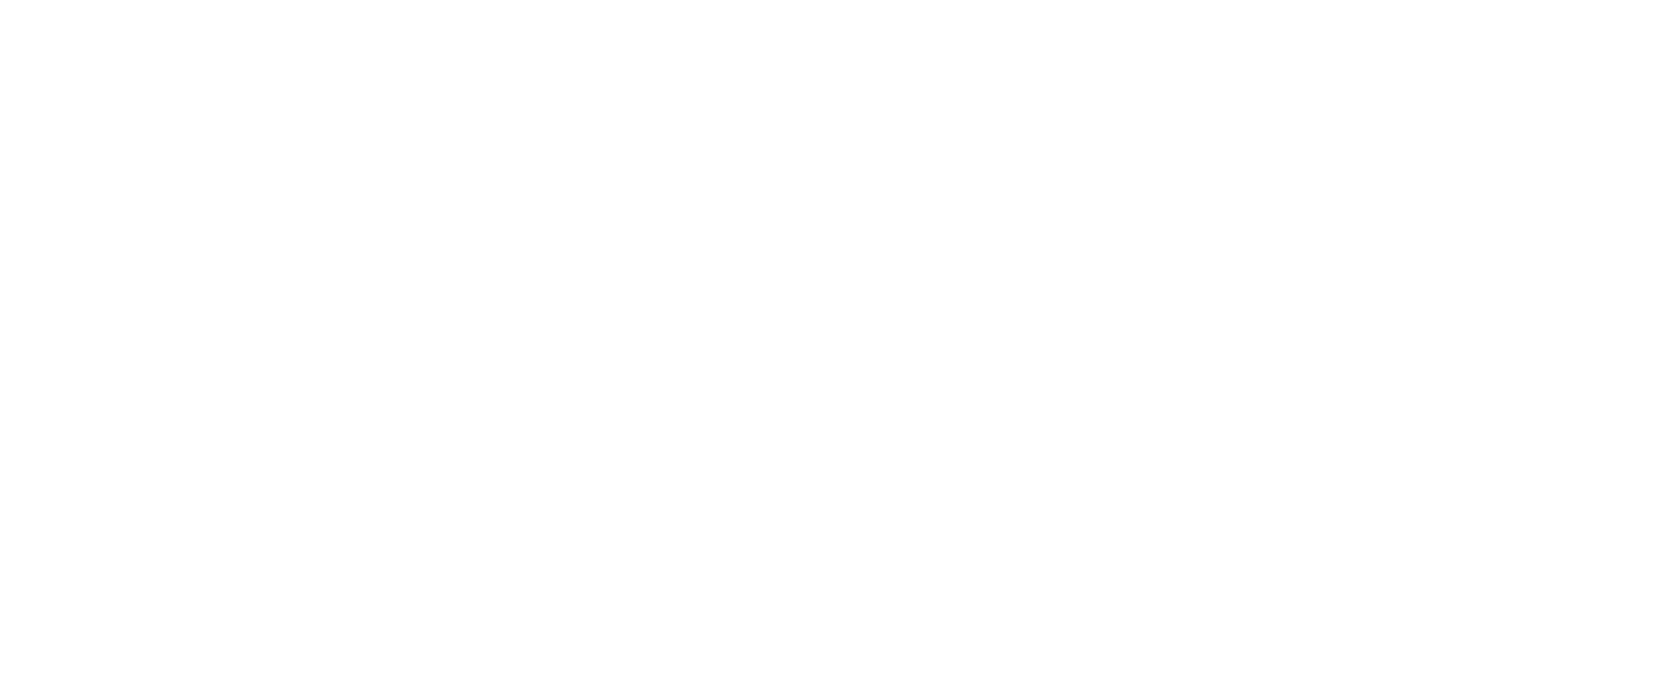 The Kellogg's logo.'